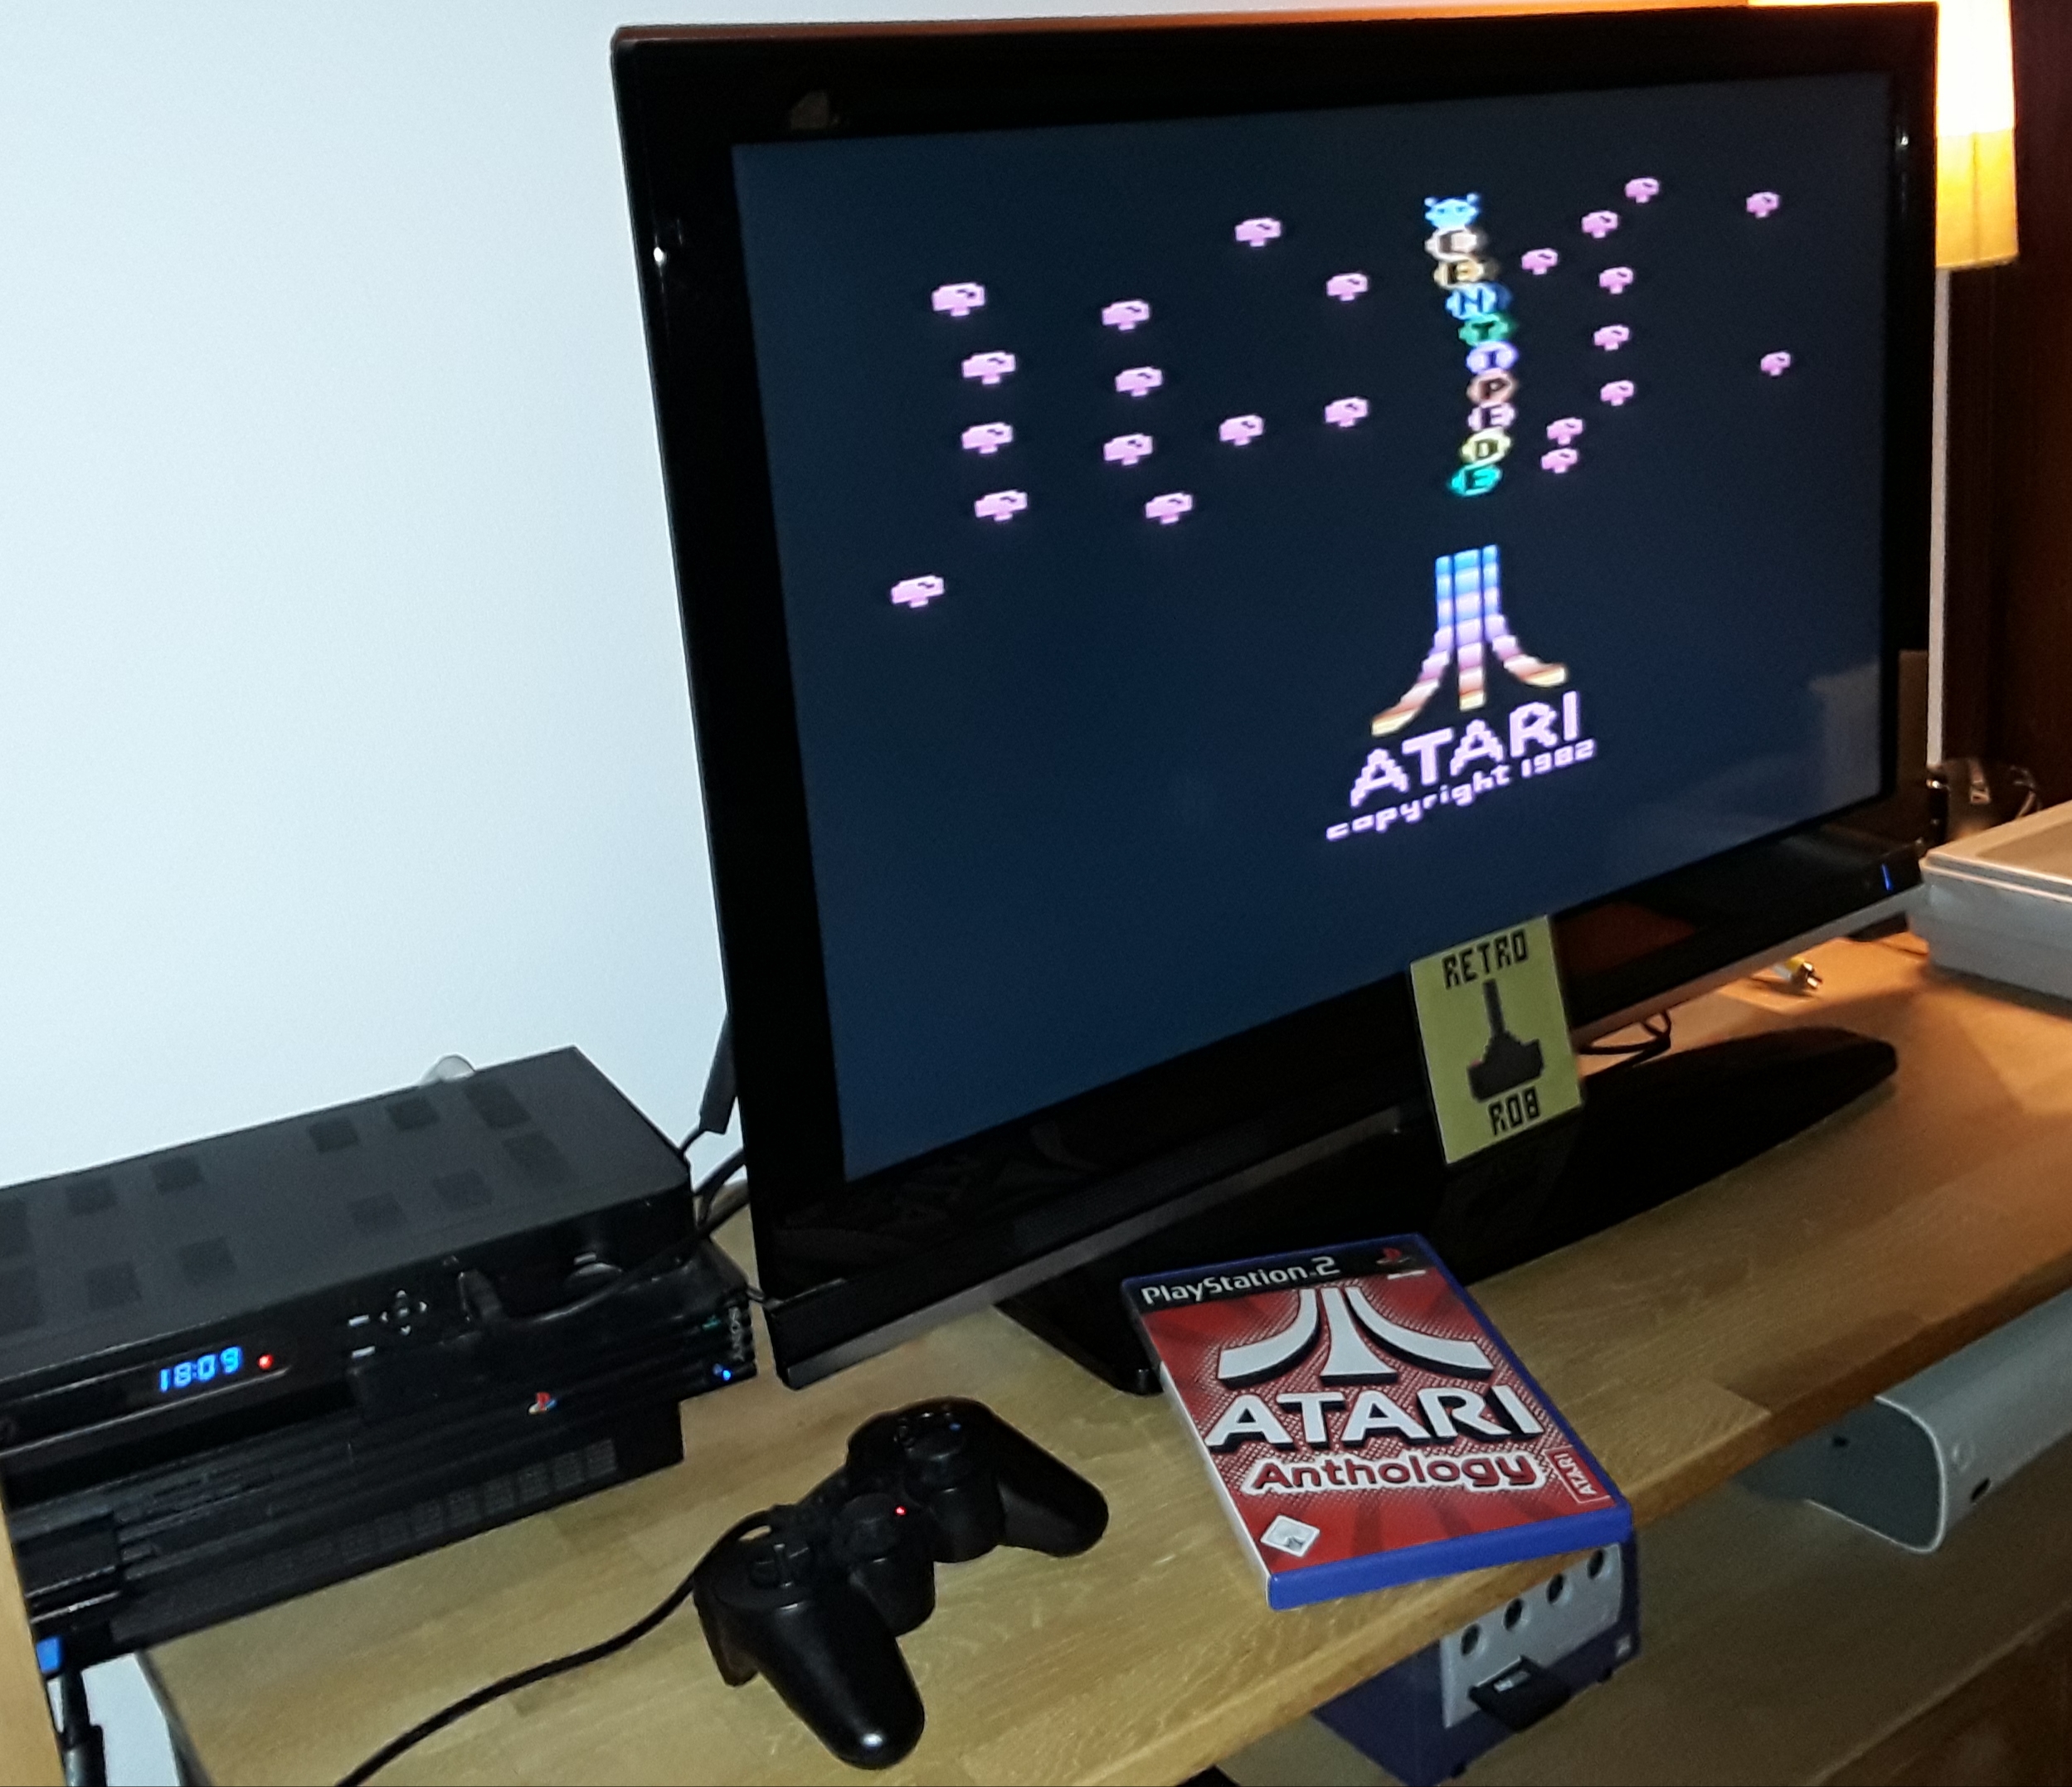 RetroRob: Atari Anthology: Centipede - Home Version (Playstation 2) 19,889 points on 2019-01-29 10:12:30